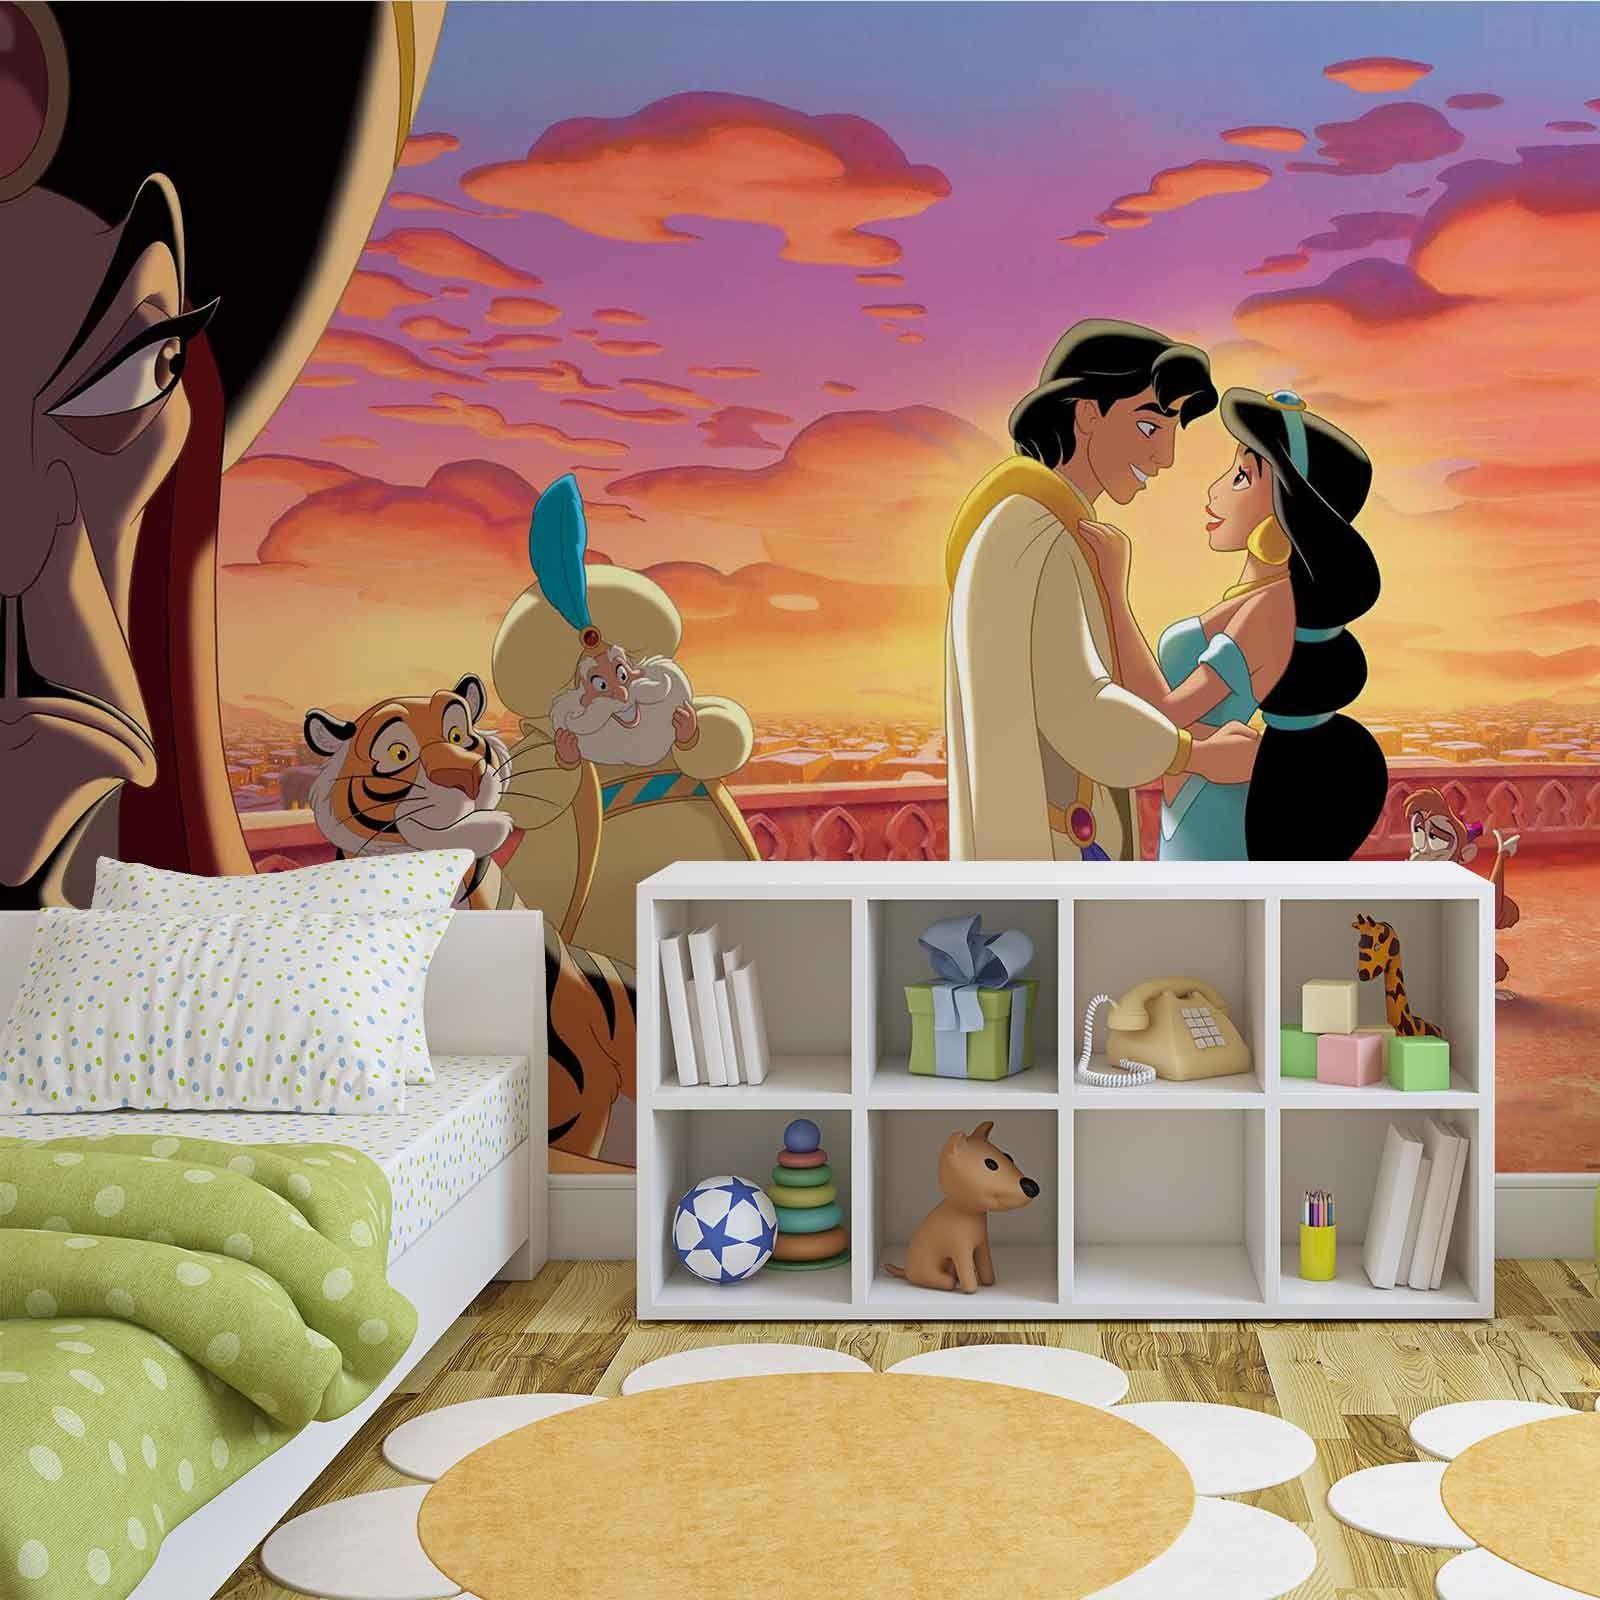 Disney Princesses Jasmine Aladdin Photo Wallpaper Mural 2448WM